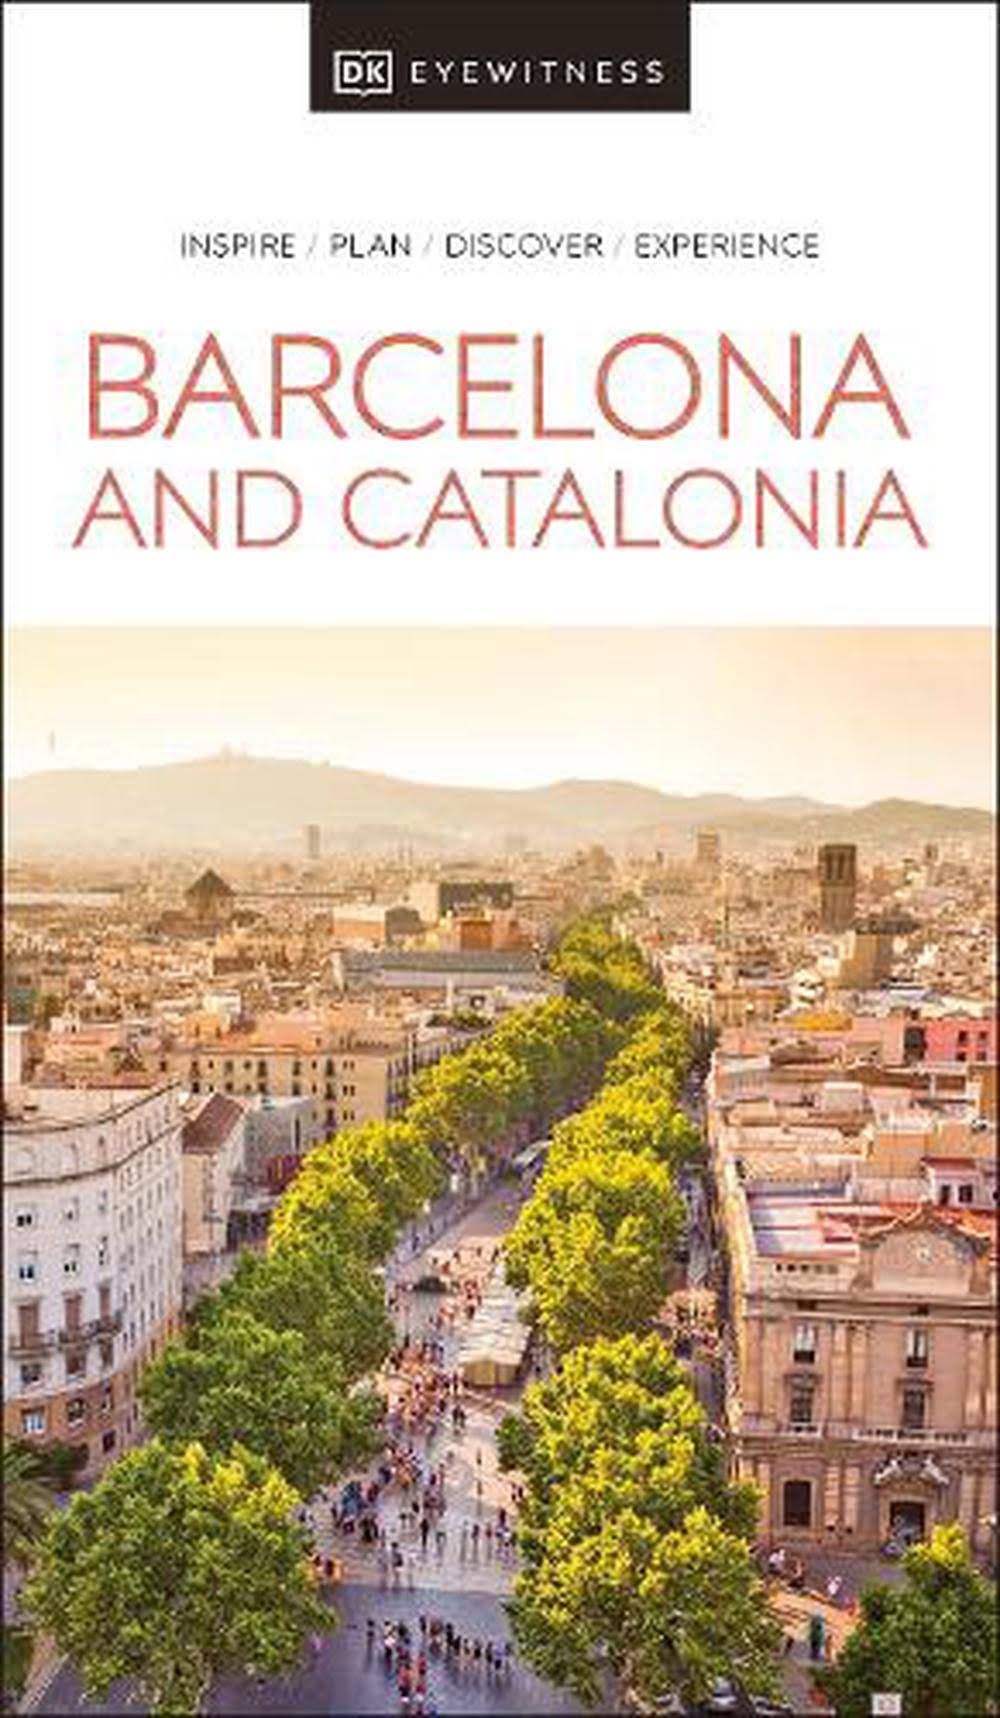 DK Eyewitness Barcelona and Catalonia